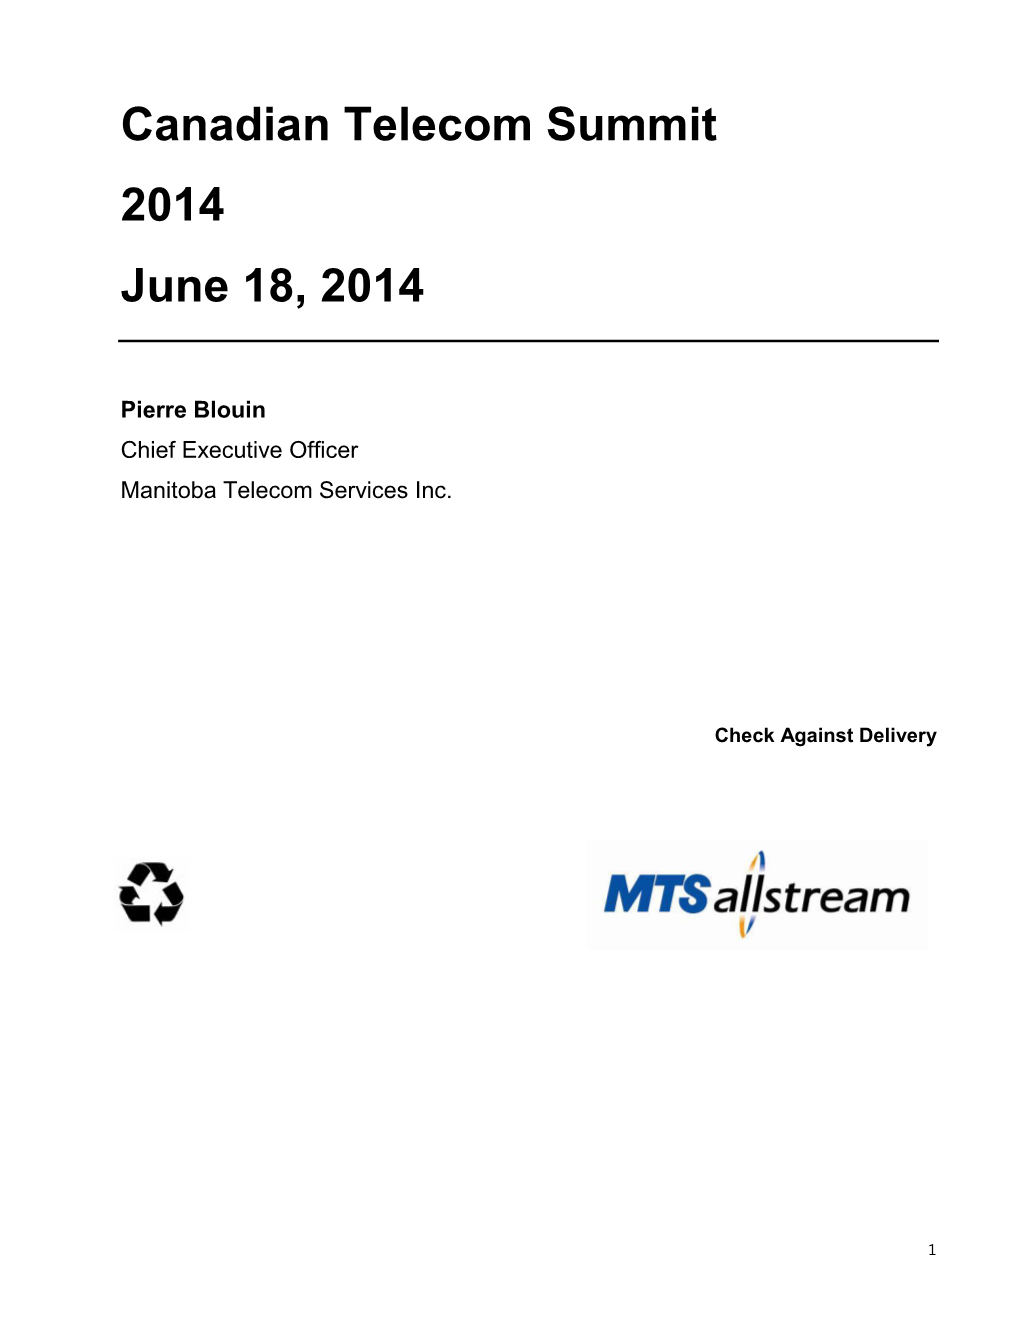 Canadian Telecom Summit 2014 June 18, 2014